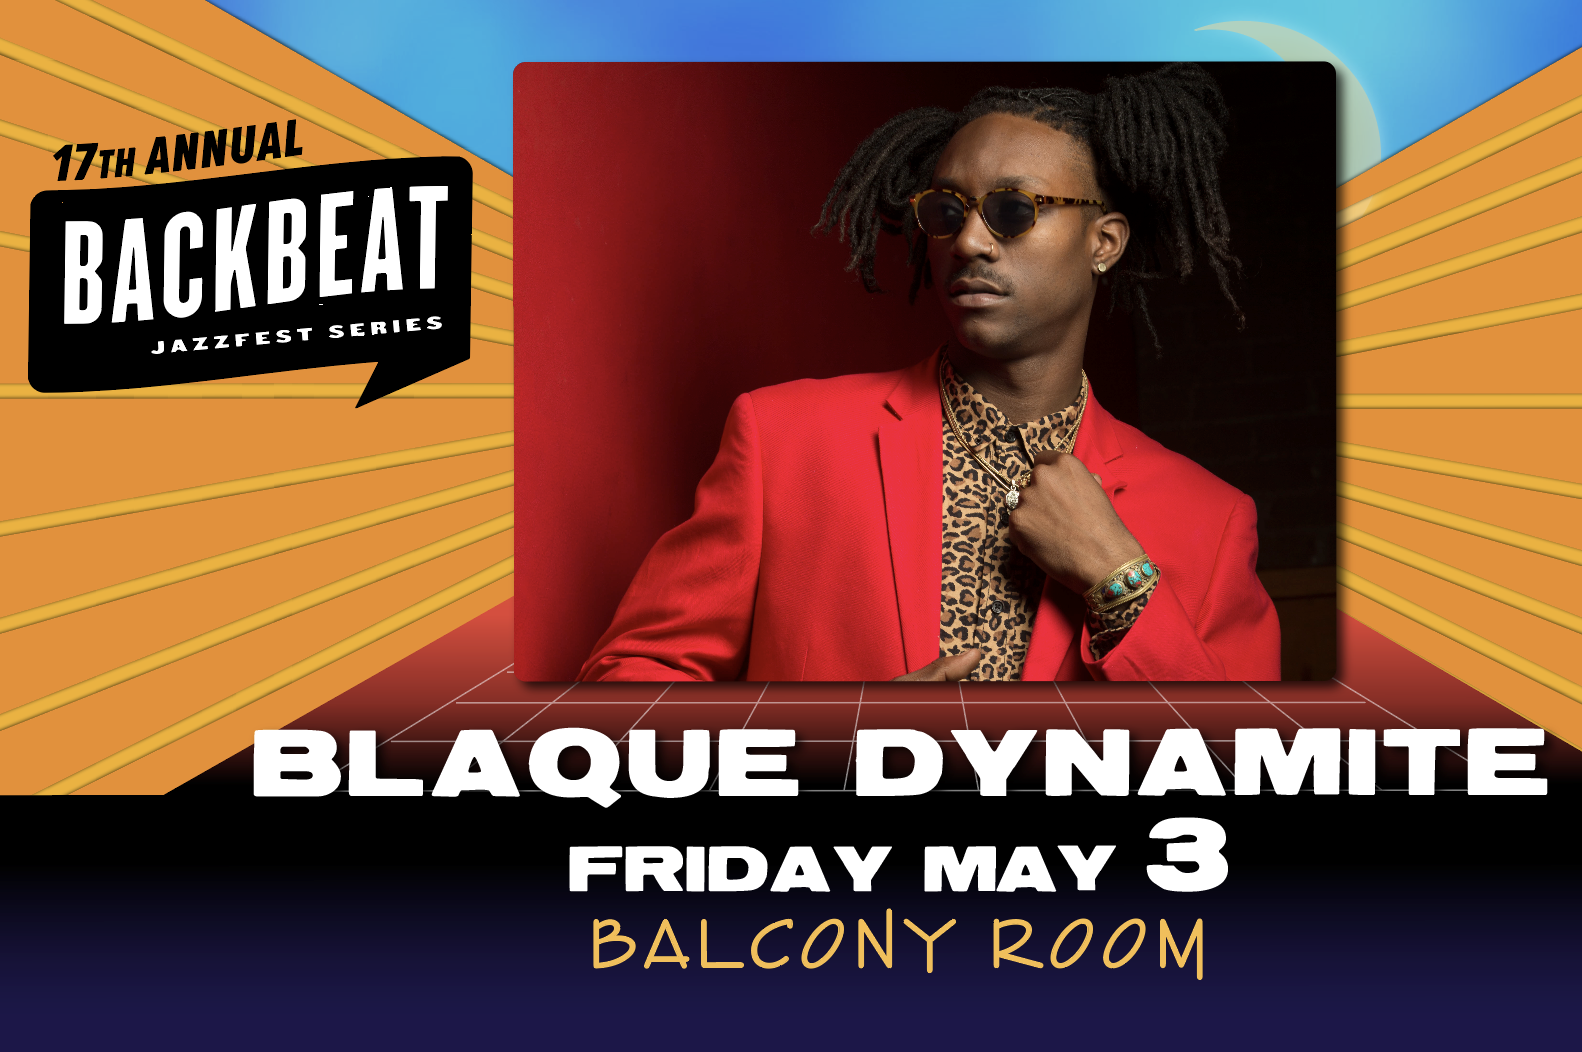 Blaque Dynamite (Balcony Room) • FRI MAY 3 • 11PM